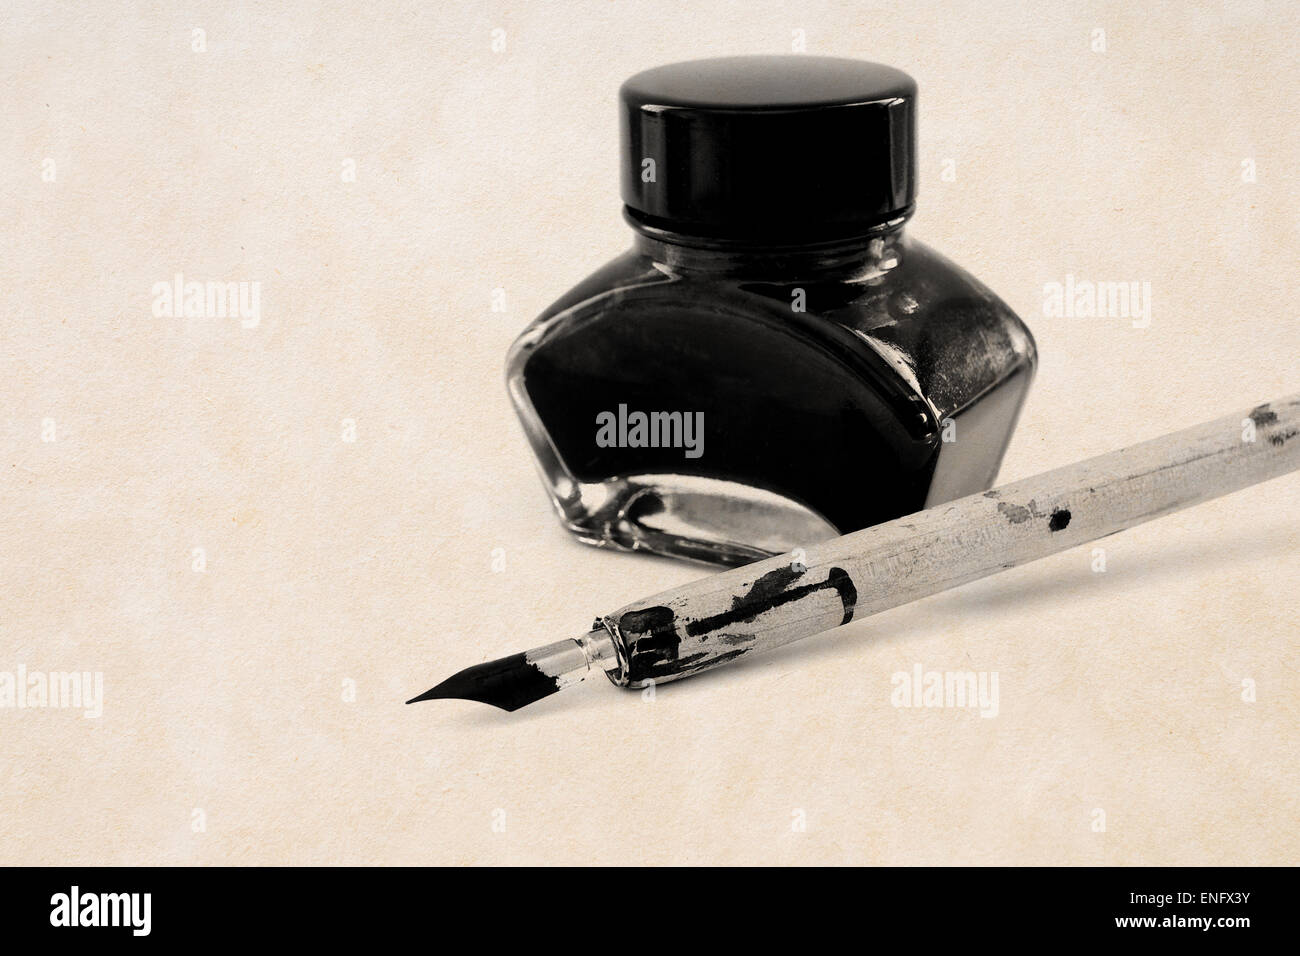 Vecchia penna e calamaio Foto stock - Alamy